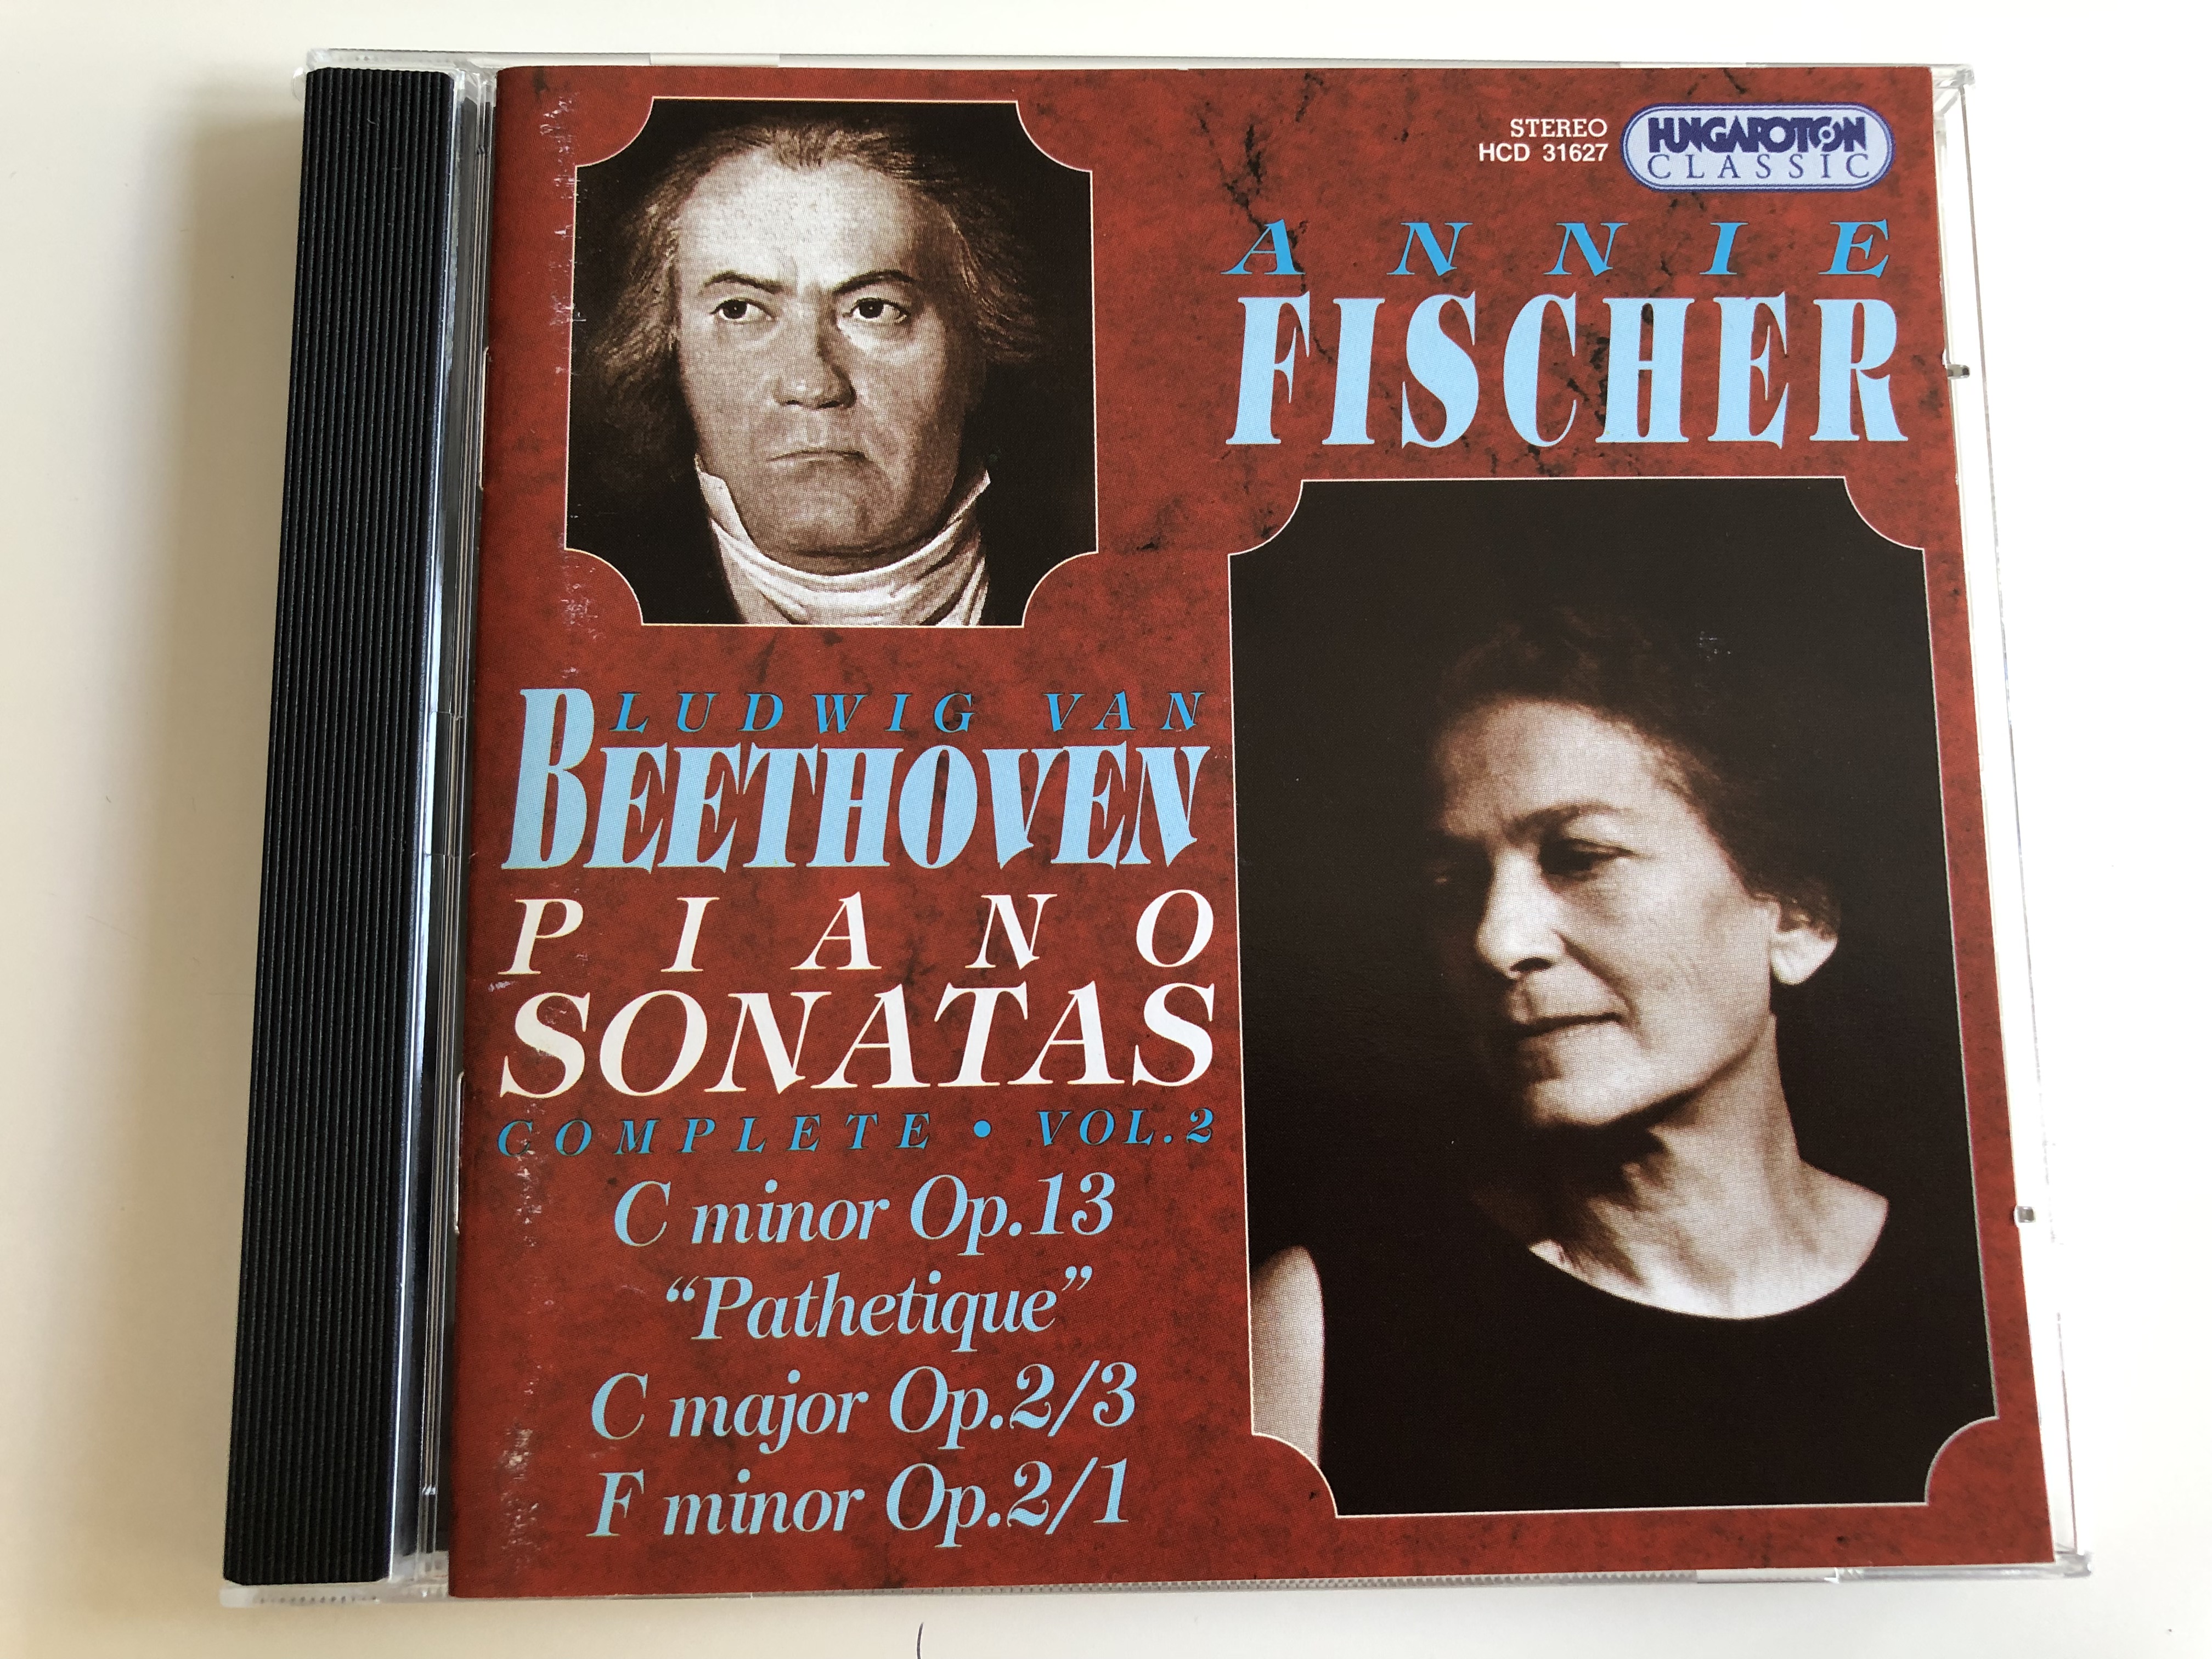 annie-fischer-beethoven-piano-sonatas-complete-vol.-2-c-minor-op.-13-pathetique-c-major-op.-2-no.3-f-minor-op.-2-no.1-audio-cd-1996-hungaroton-classic-hcd-31627-1-.jpg